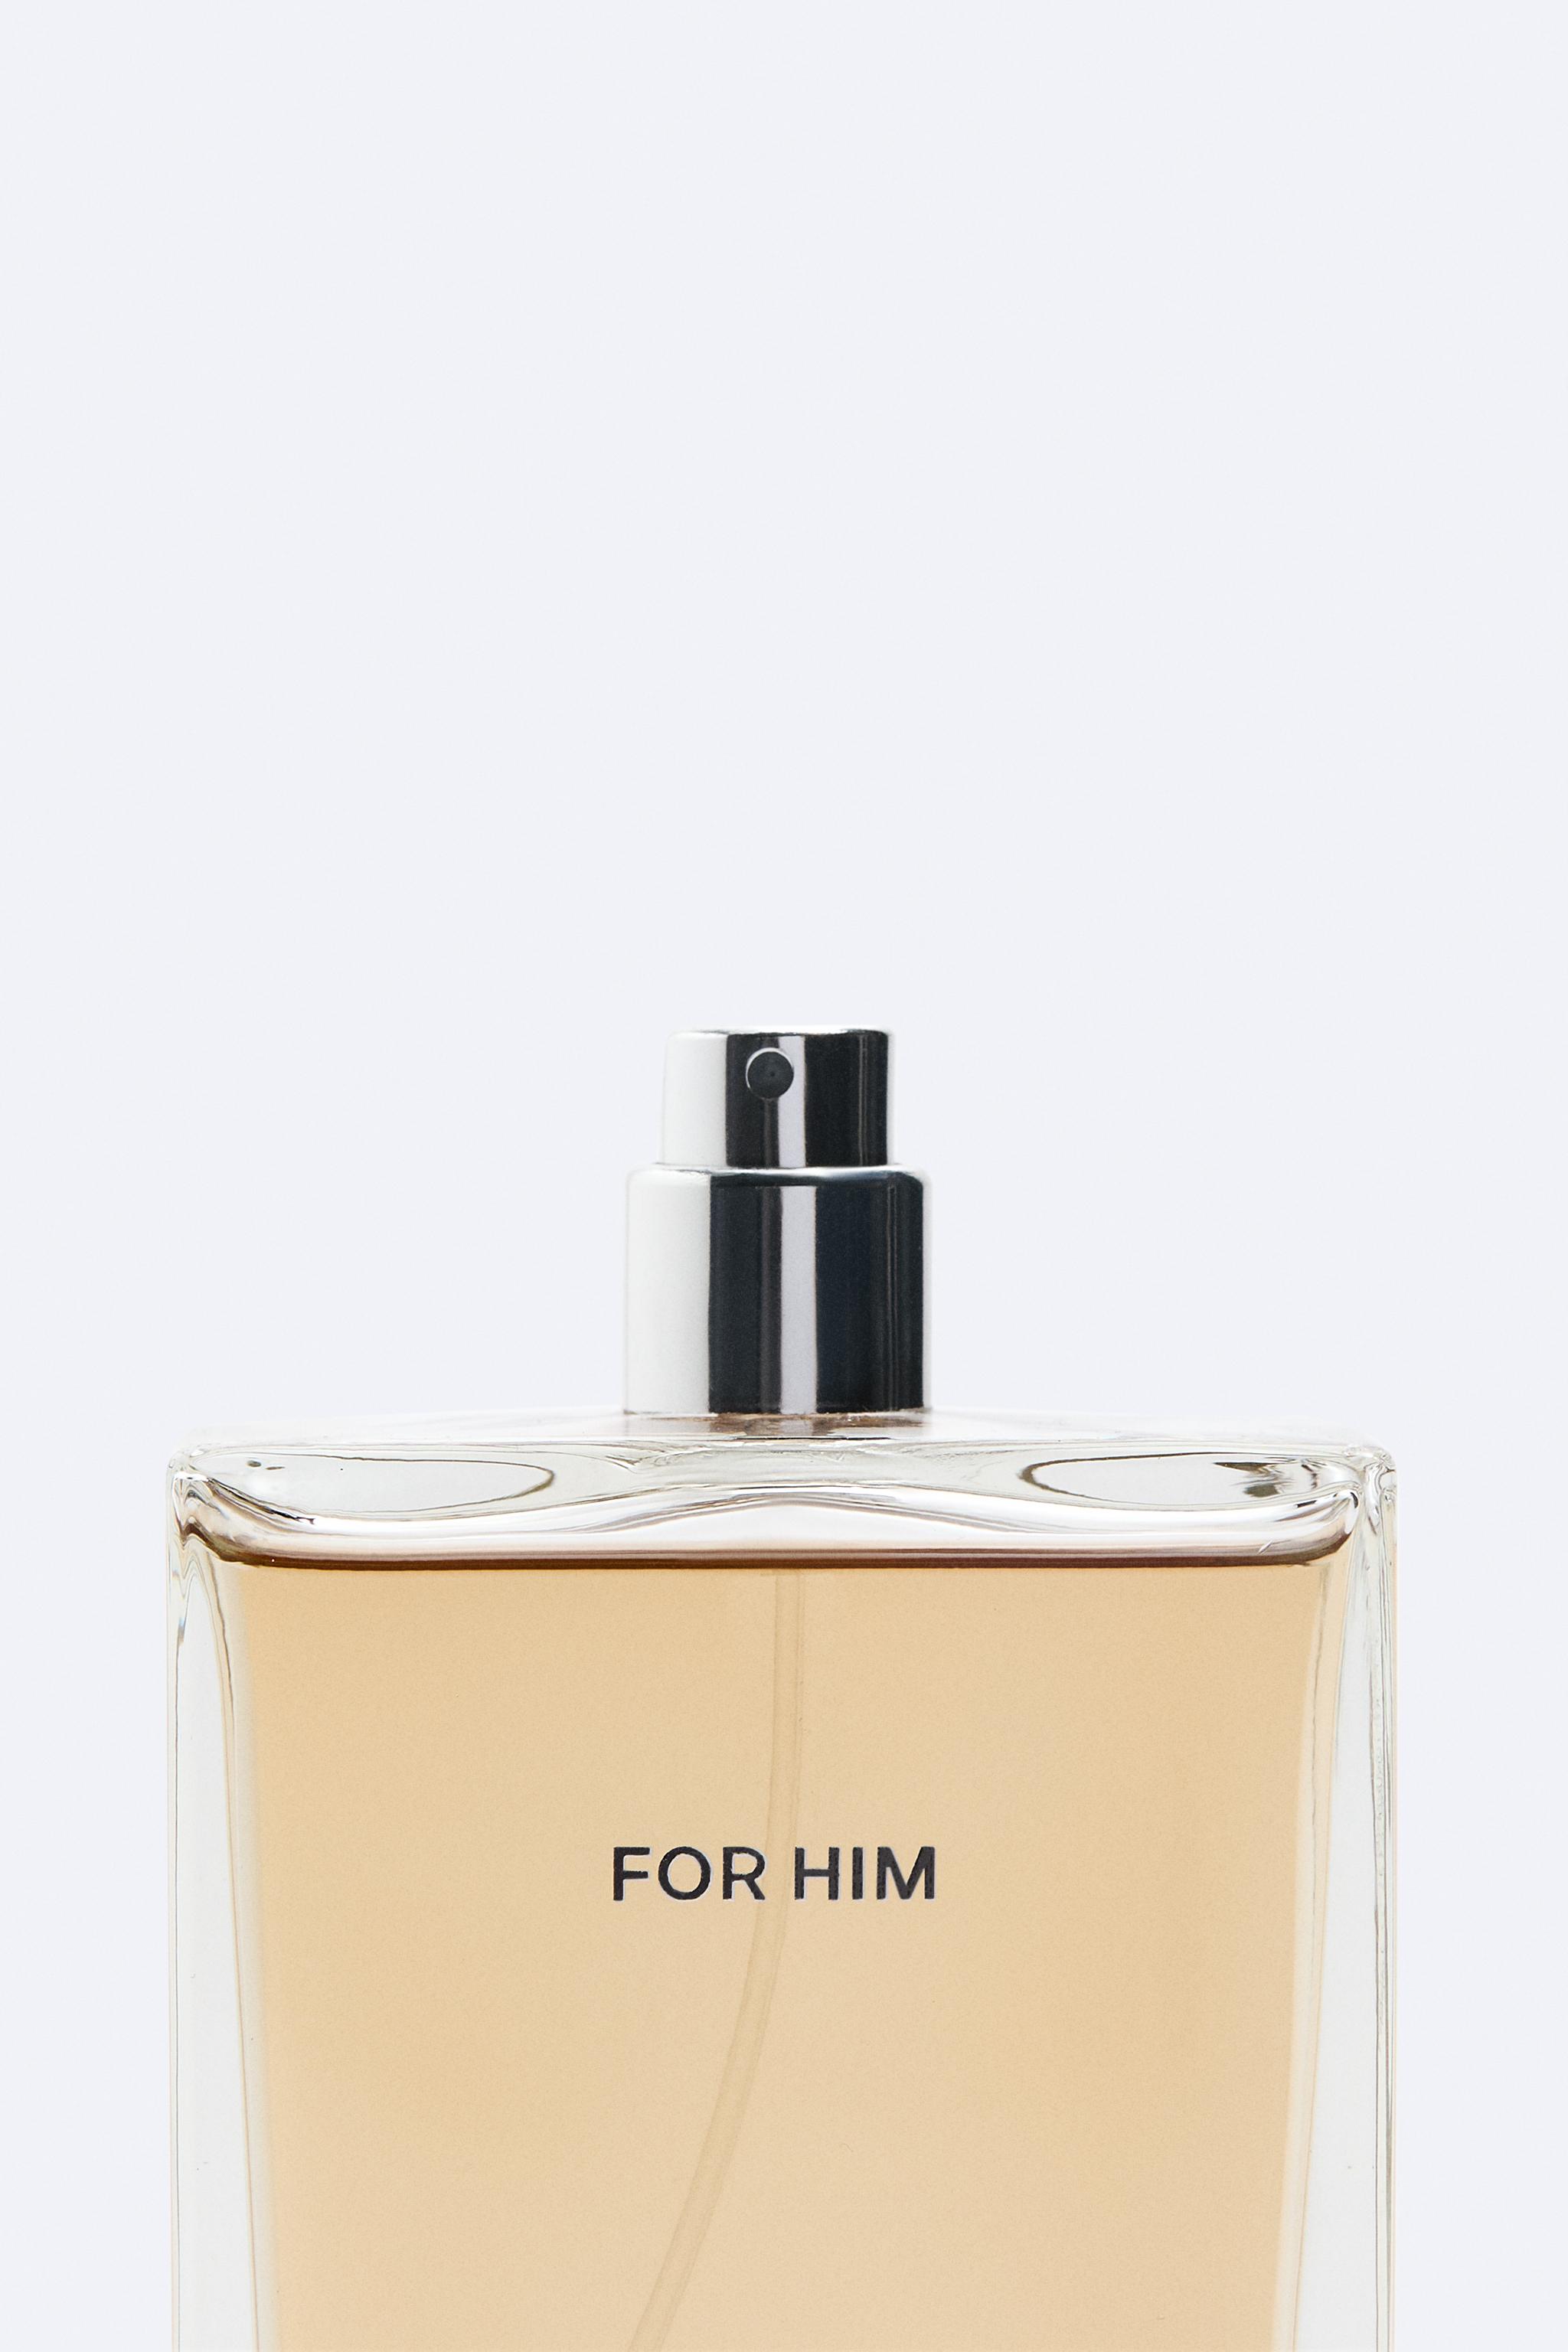 Zara VIBRANT LEATHER Original Eau de Parfum Man Fragrance Woody